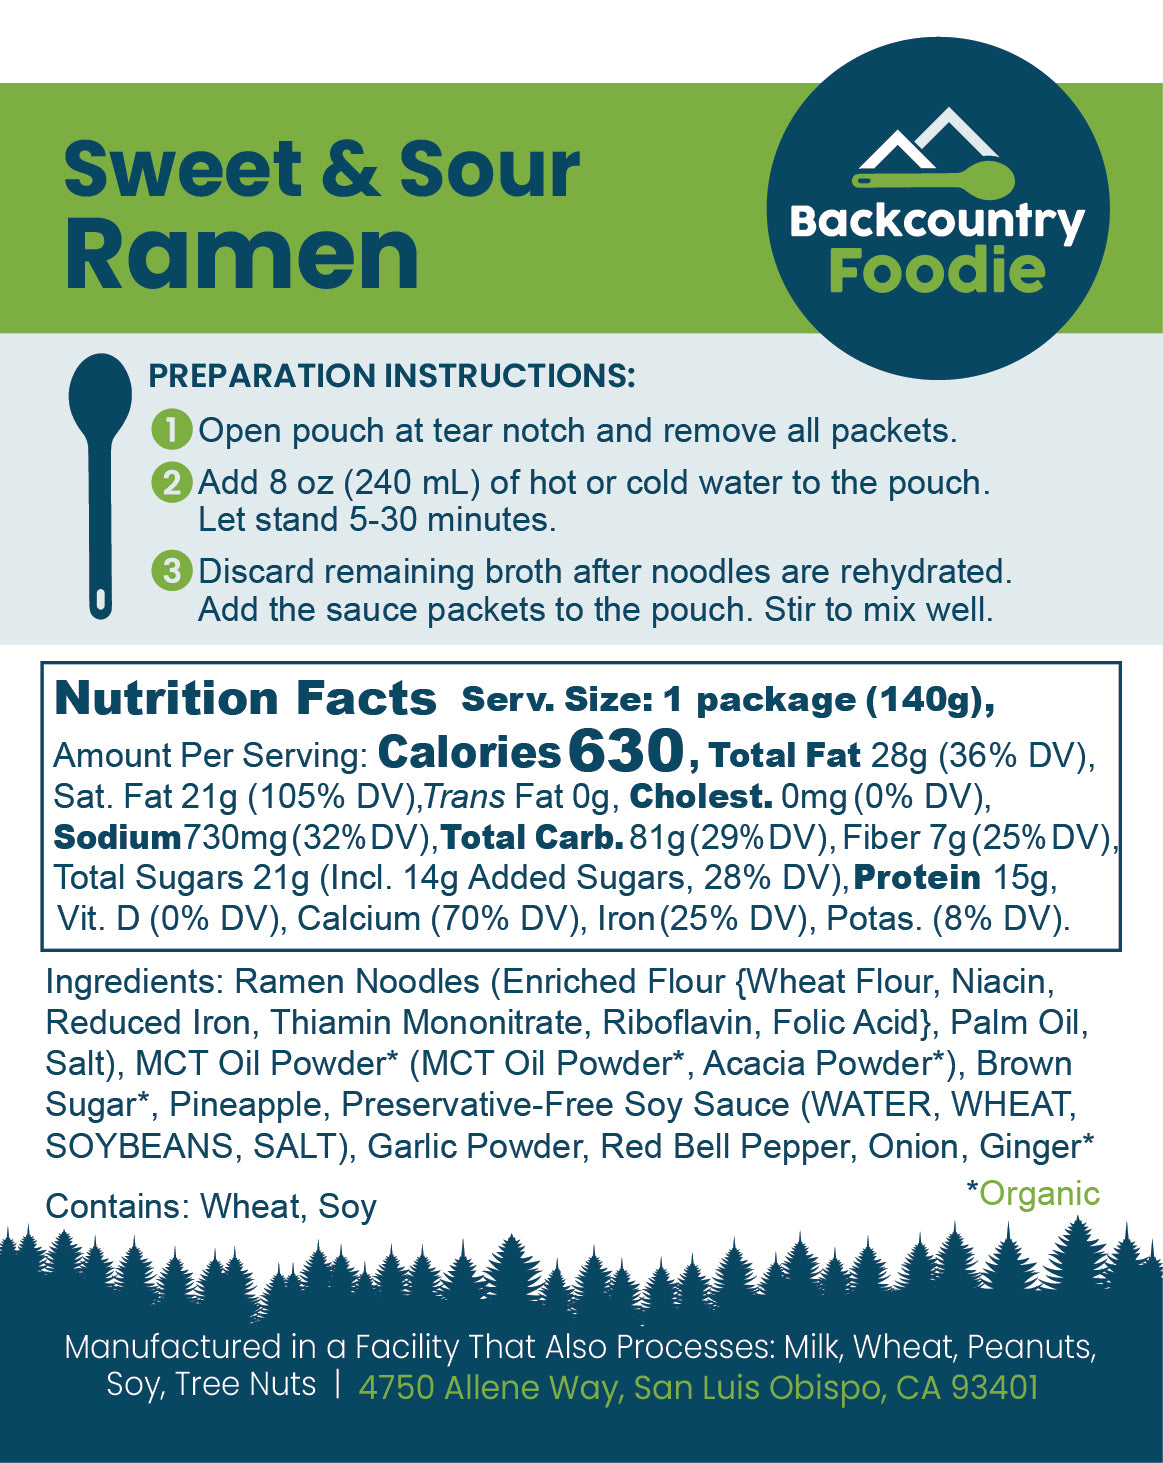 Backcountry Foodie - Sweet & Sour Ramen